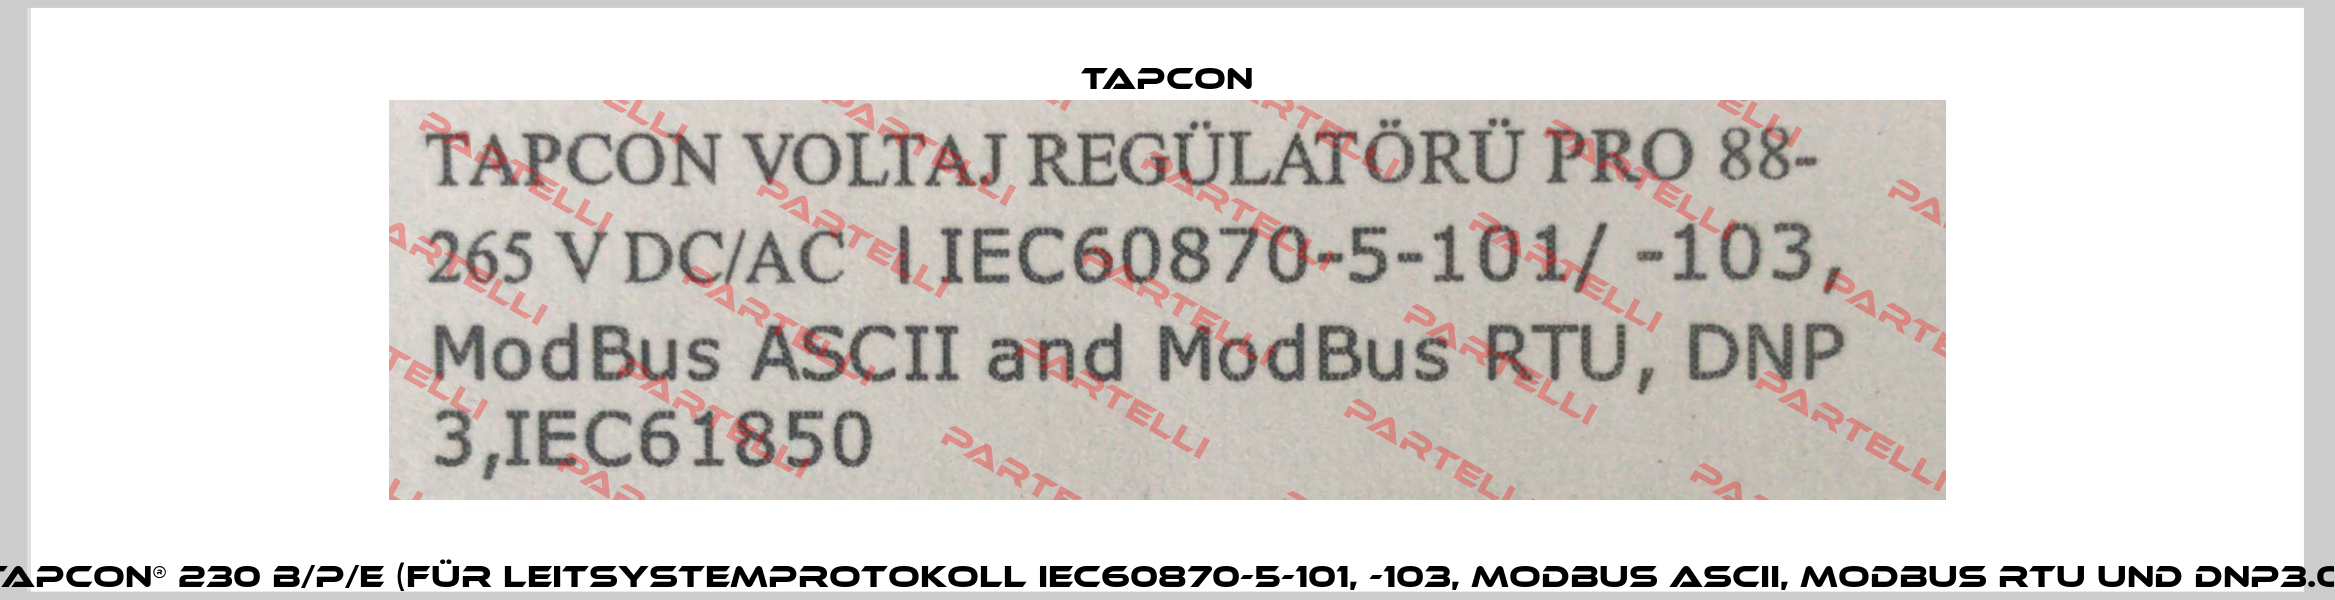 TAPCON® 230 B/P/E (für Leitsystemprotokoll IEC60870-5-101, -103, MODBUS ASCII, MODBUS RTU und DNP3.0) Tapcon